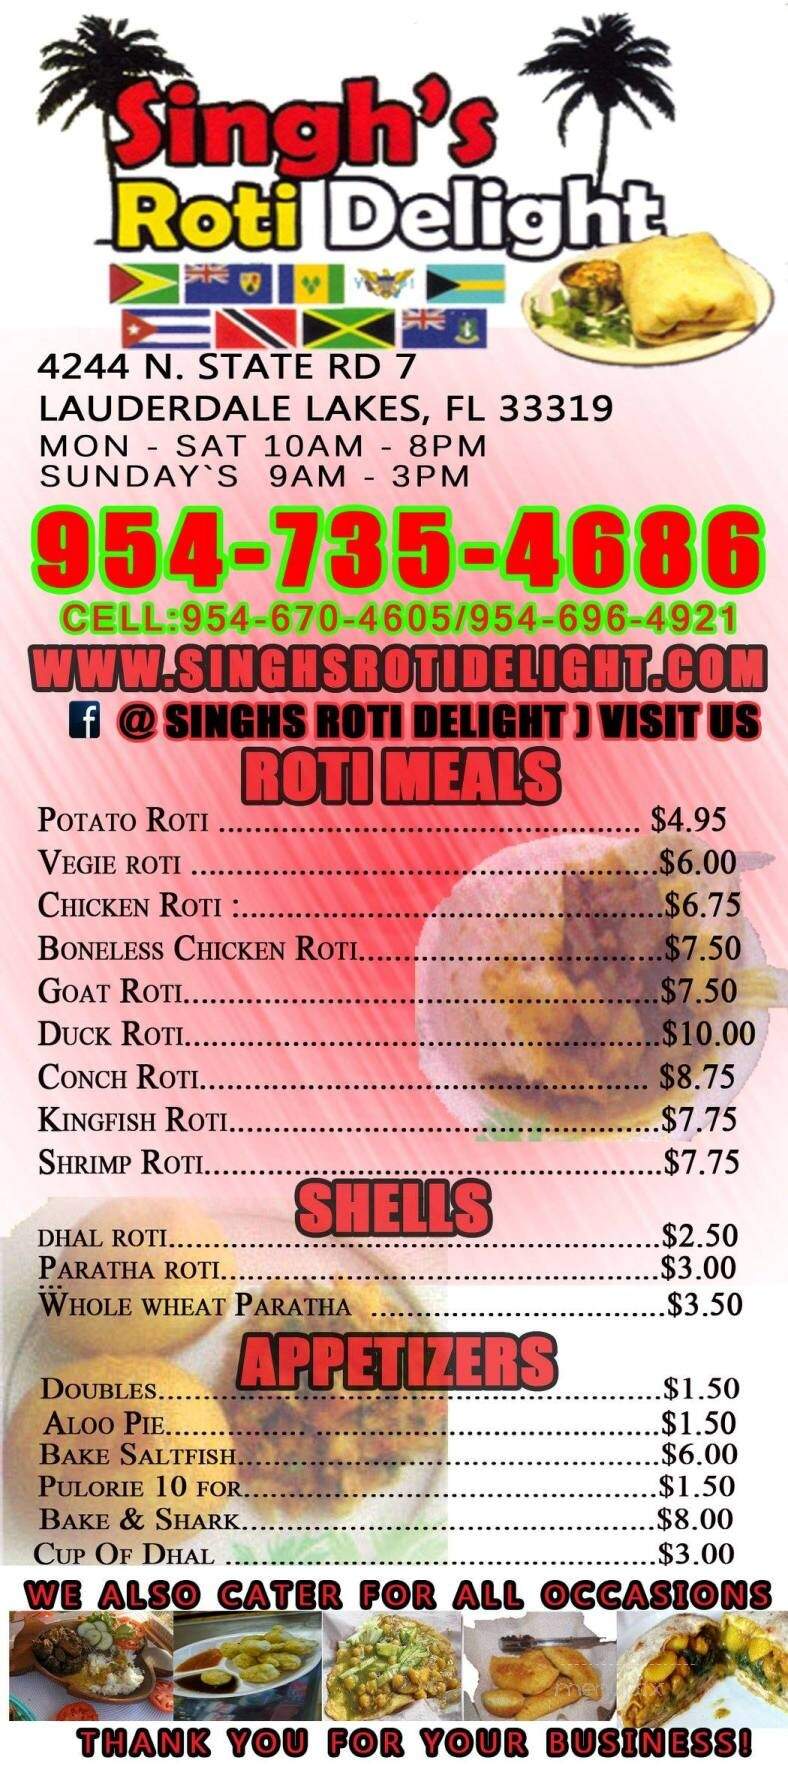 Singh's Roti Delight - Lauderdale Lakes, FL